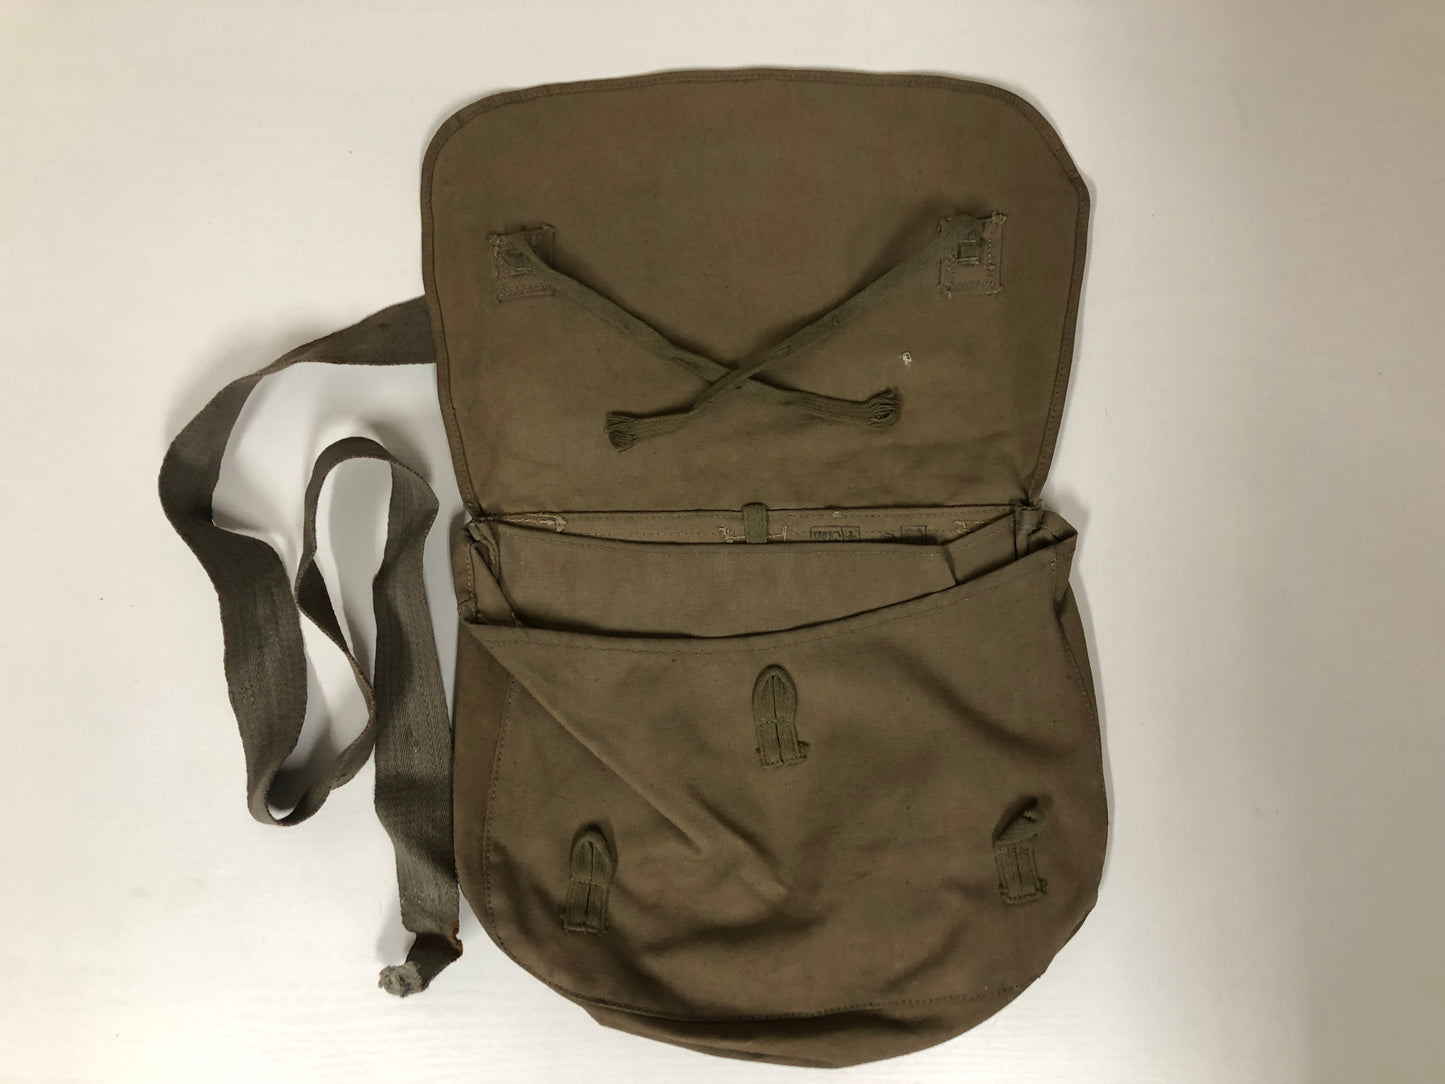 Y4064 Imperial Japan Army Bag mark military pwersonal gear Japanese WW2 vintage